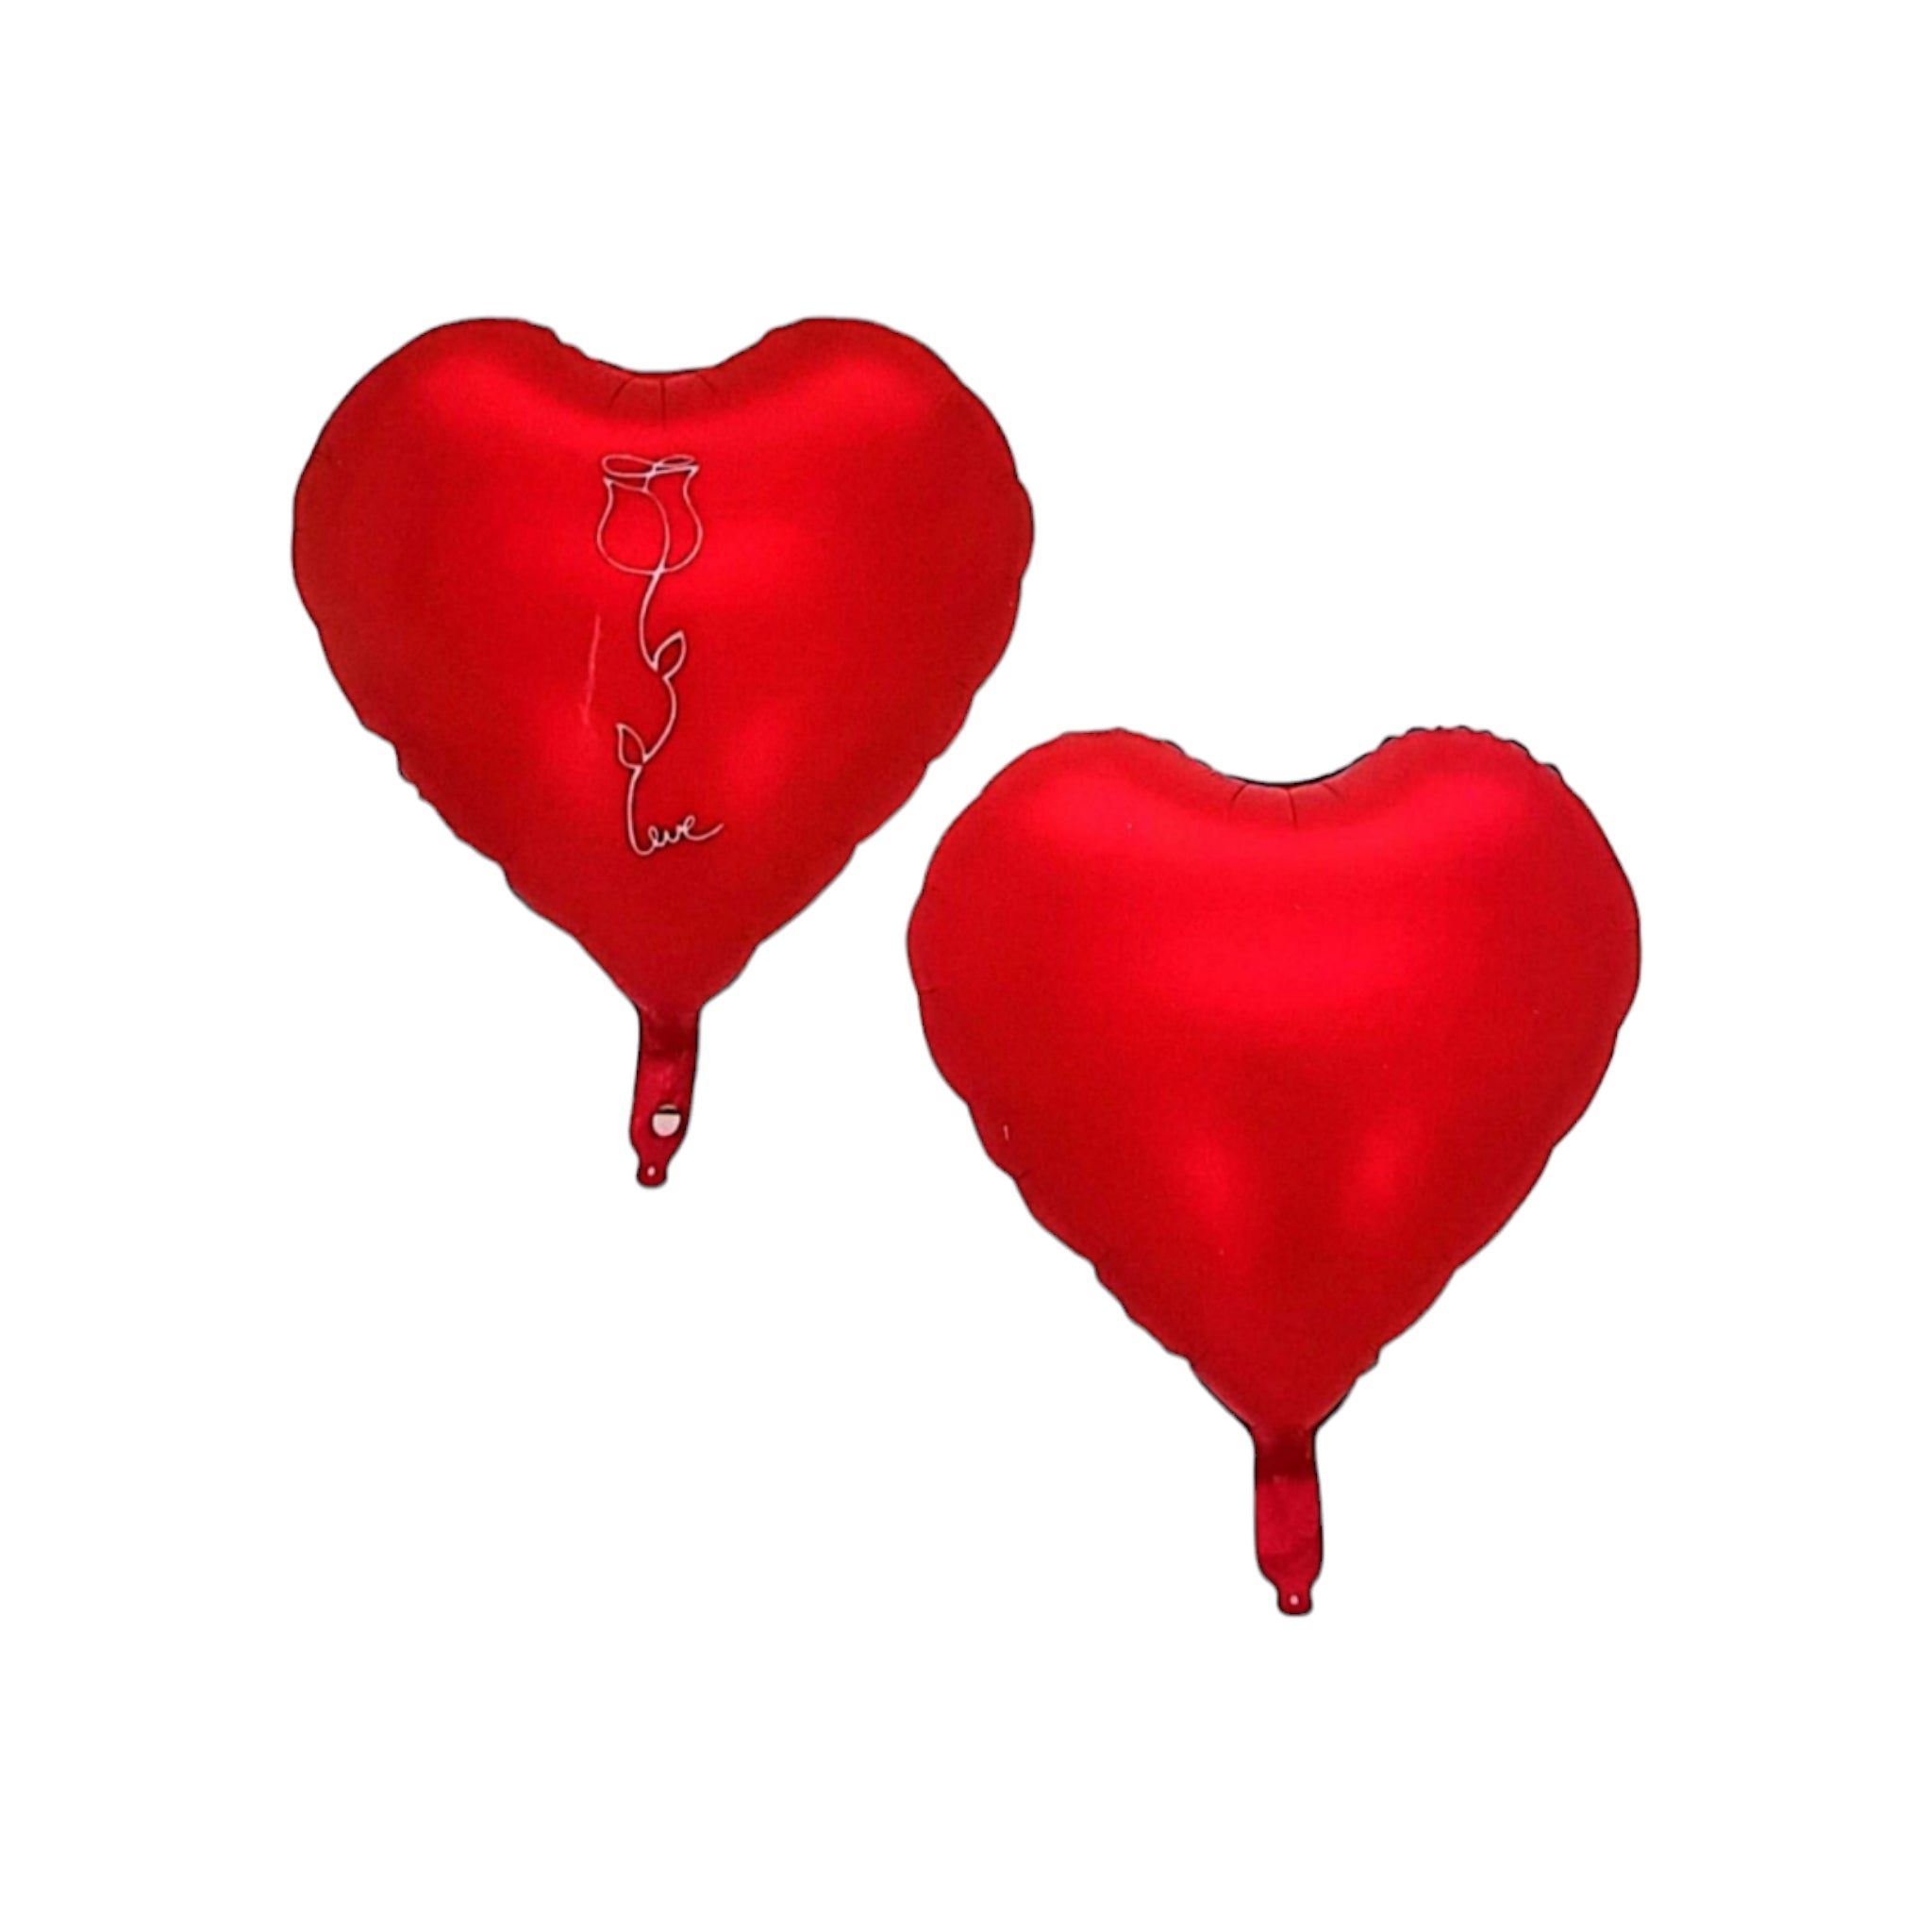 Heart Design Foil Balloon Red 18Inch Flower Print 1-Side